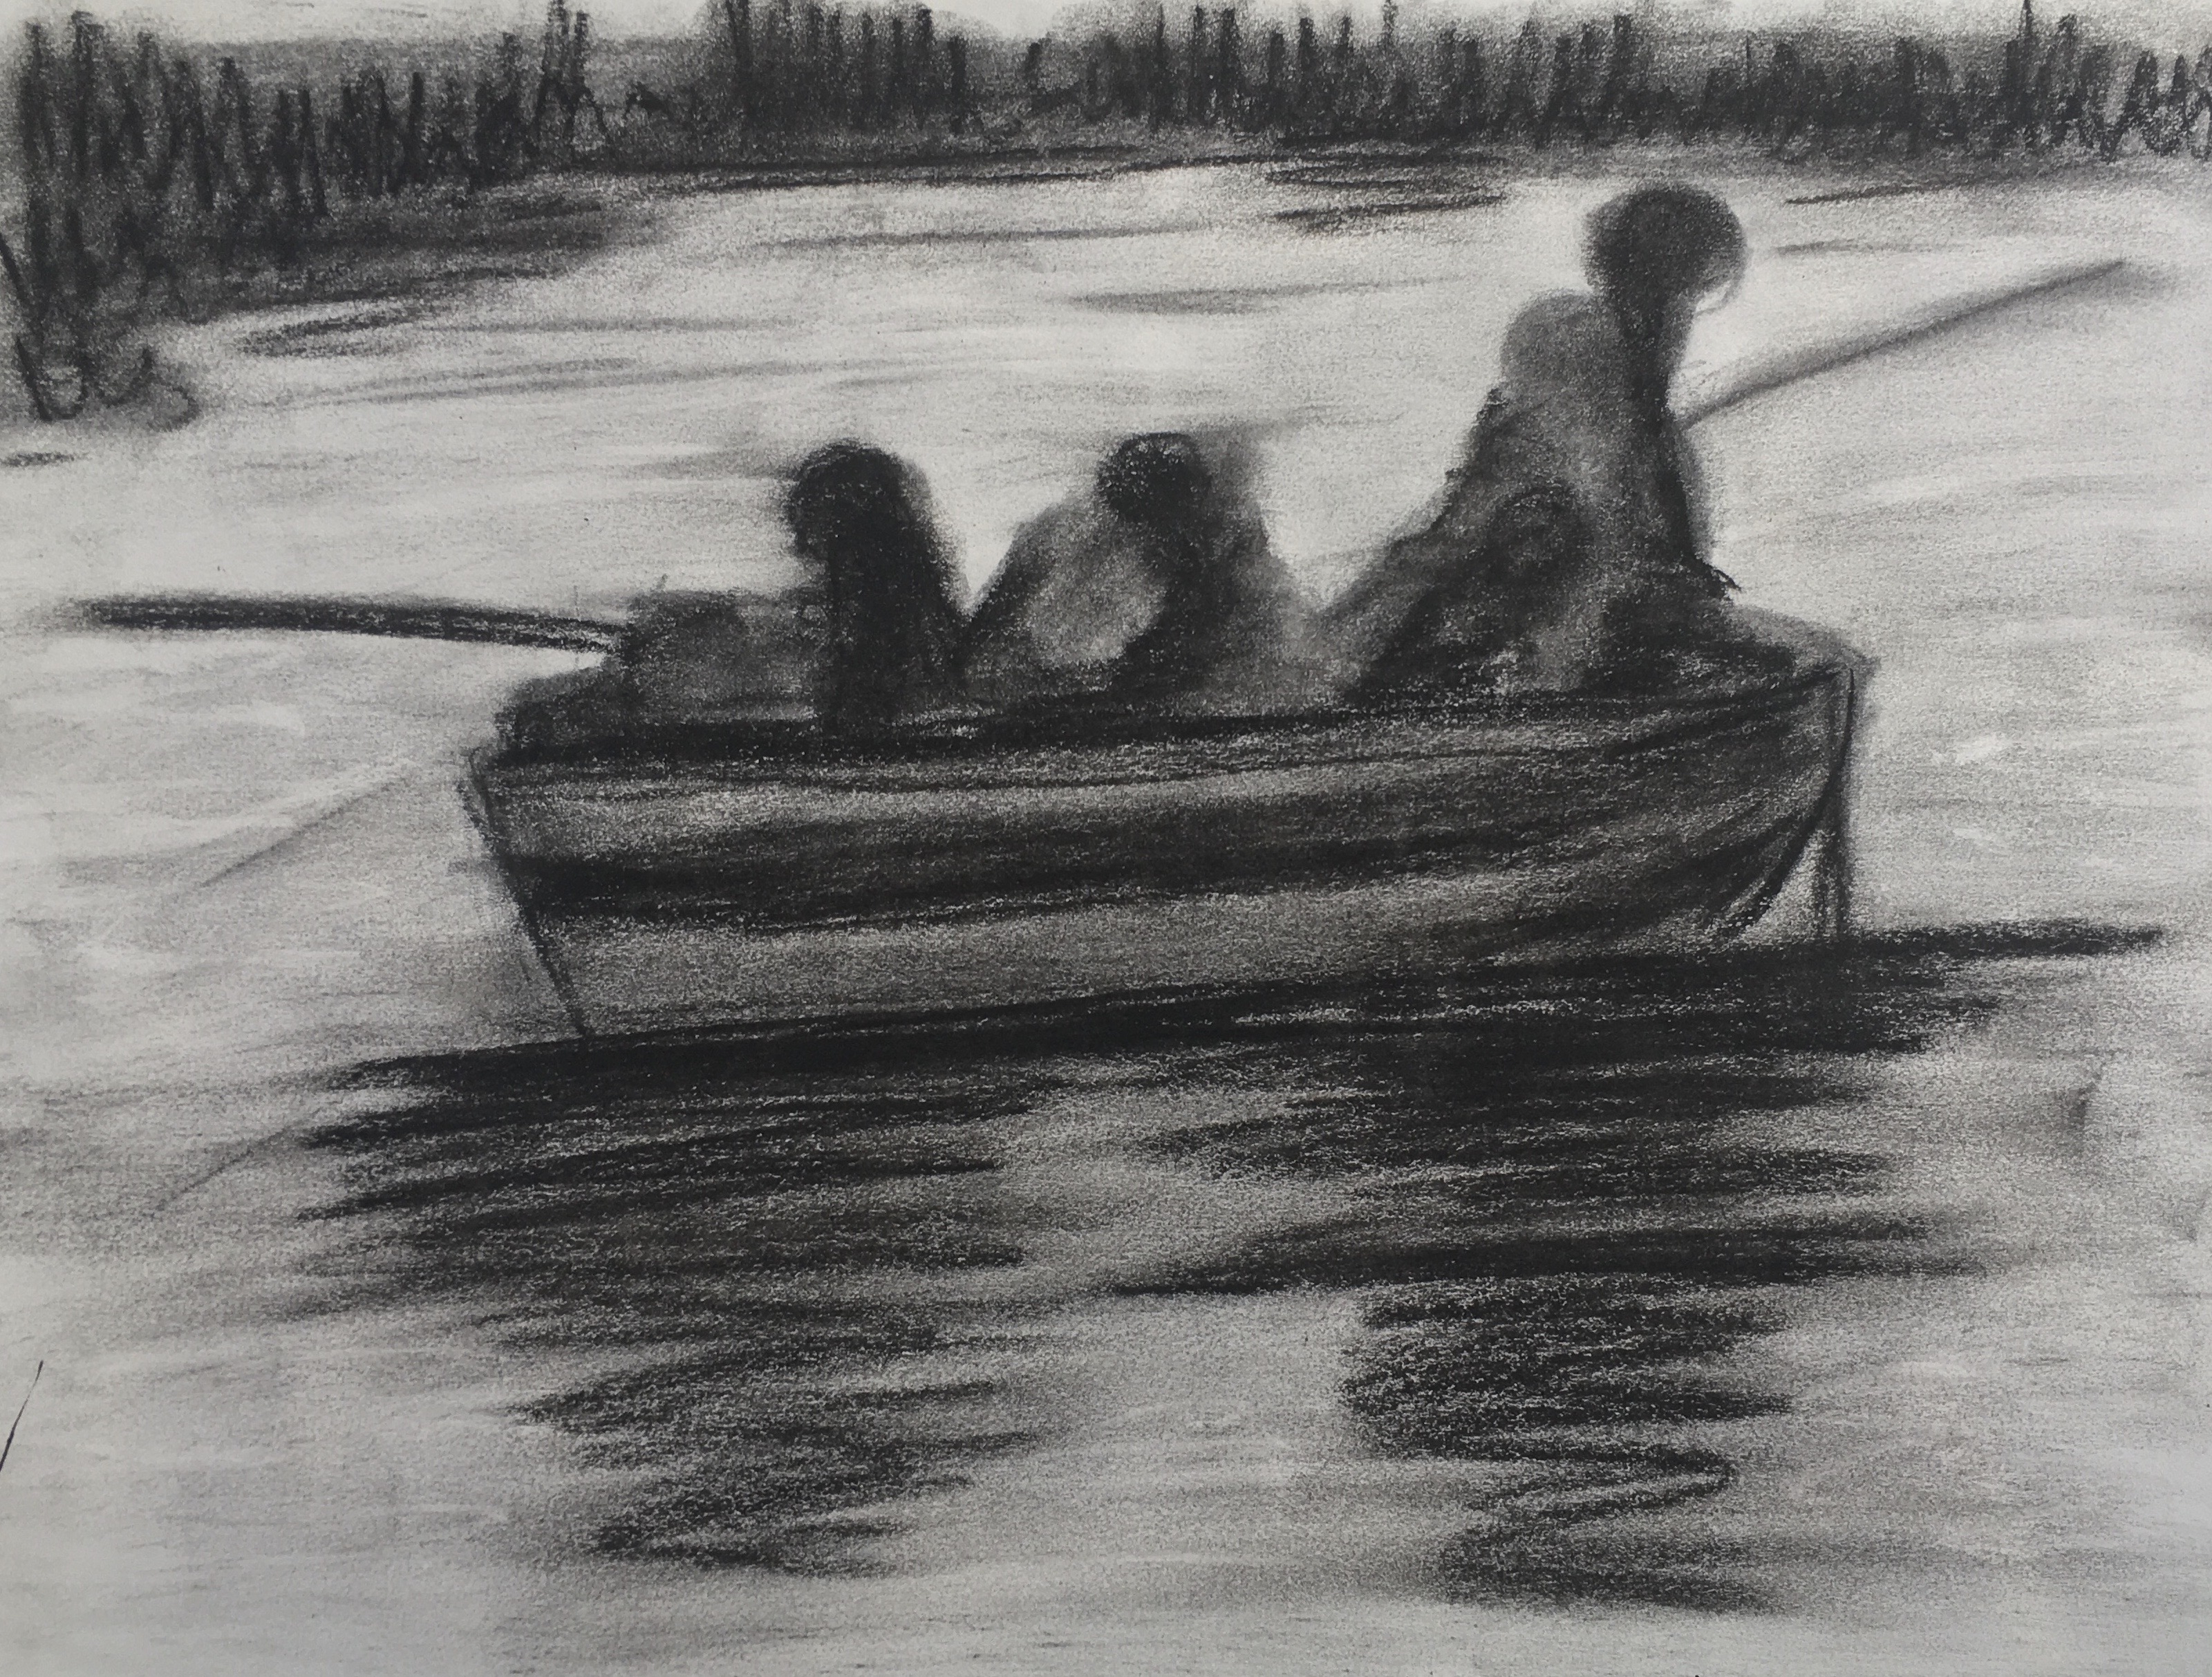 Fishing Near Shore, 1990
Charcoal on Paper, Walli White, artist